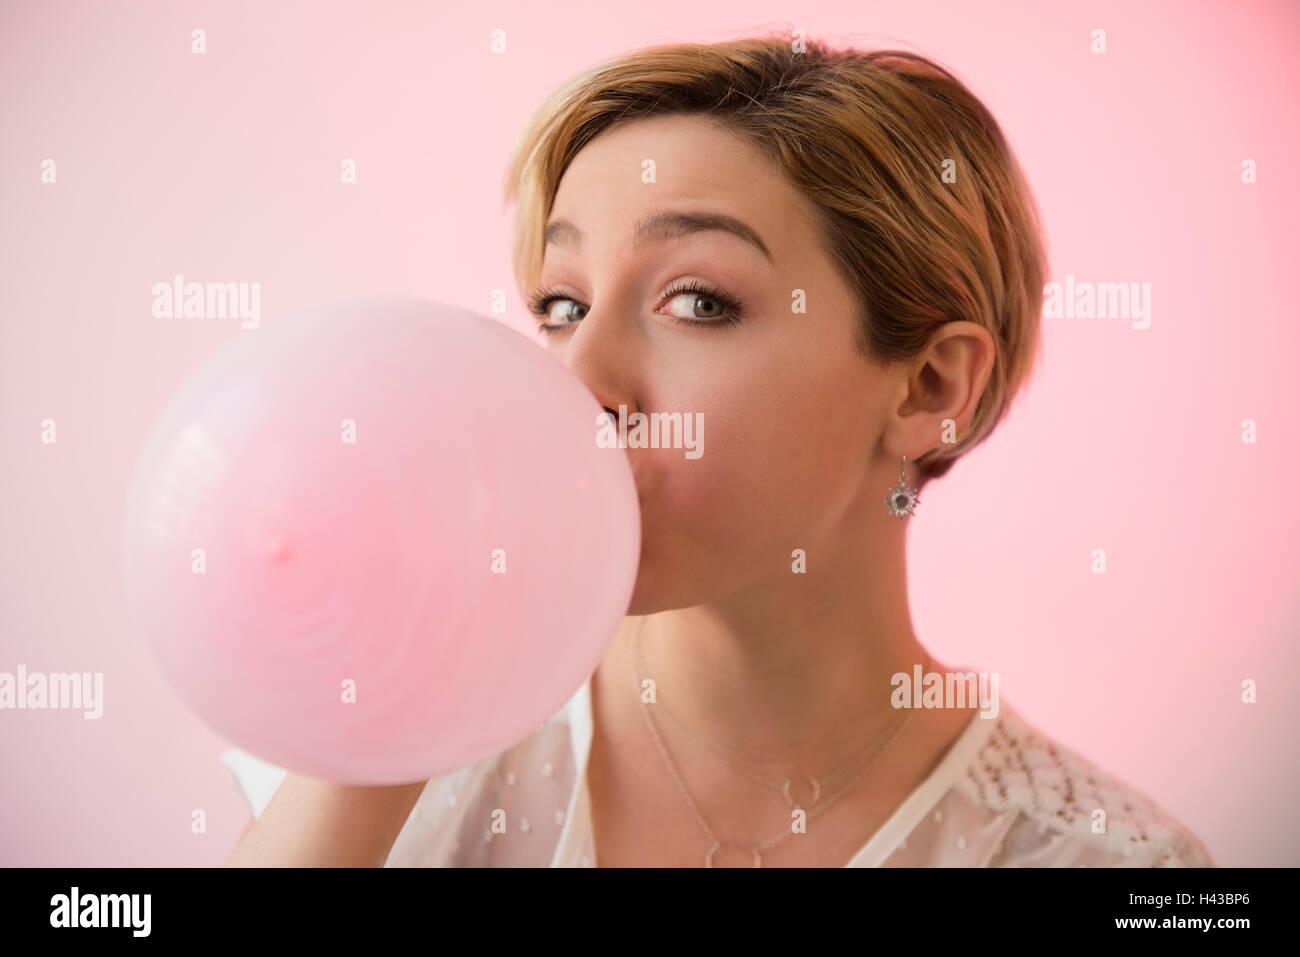 Caucasian woman inflating pink balloon Stock Photo